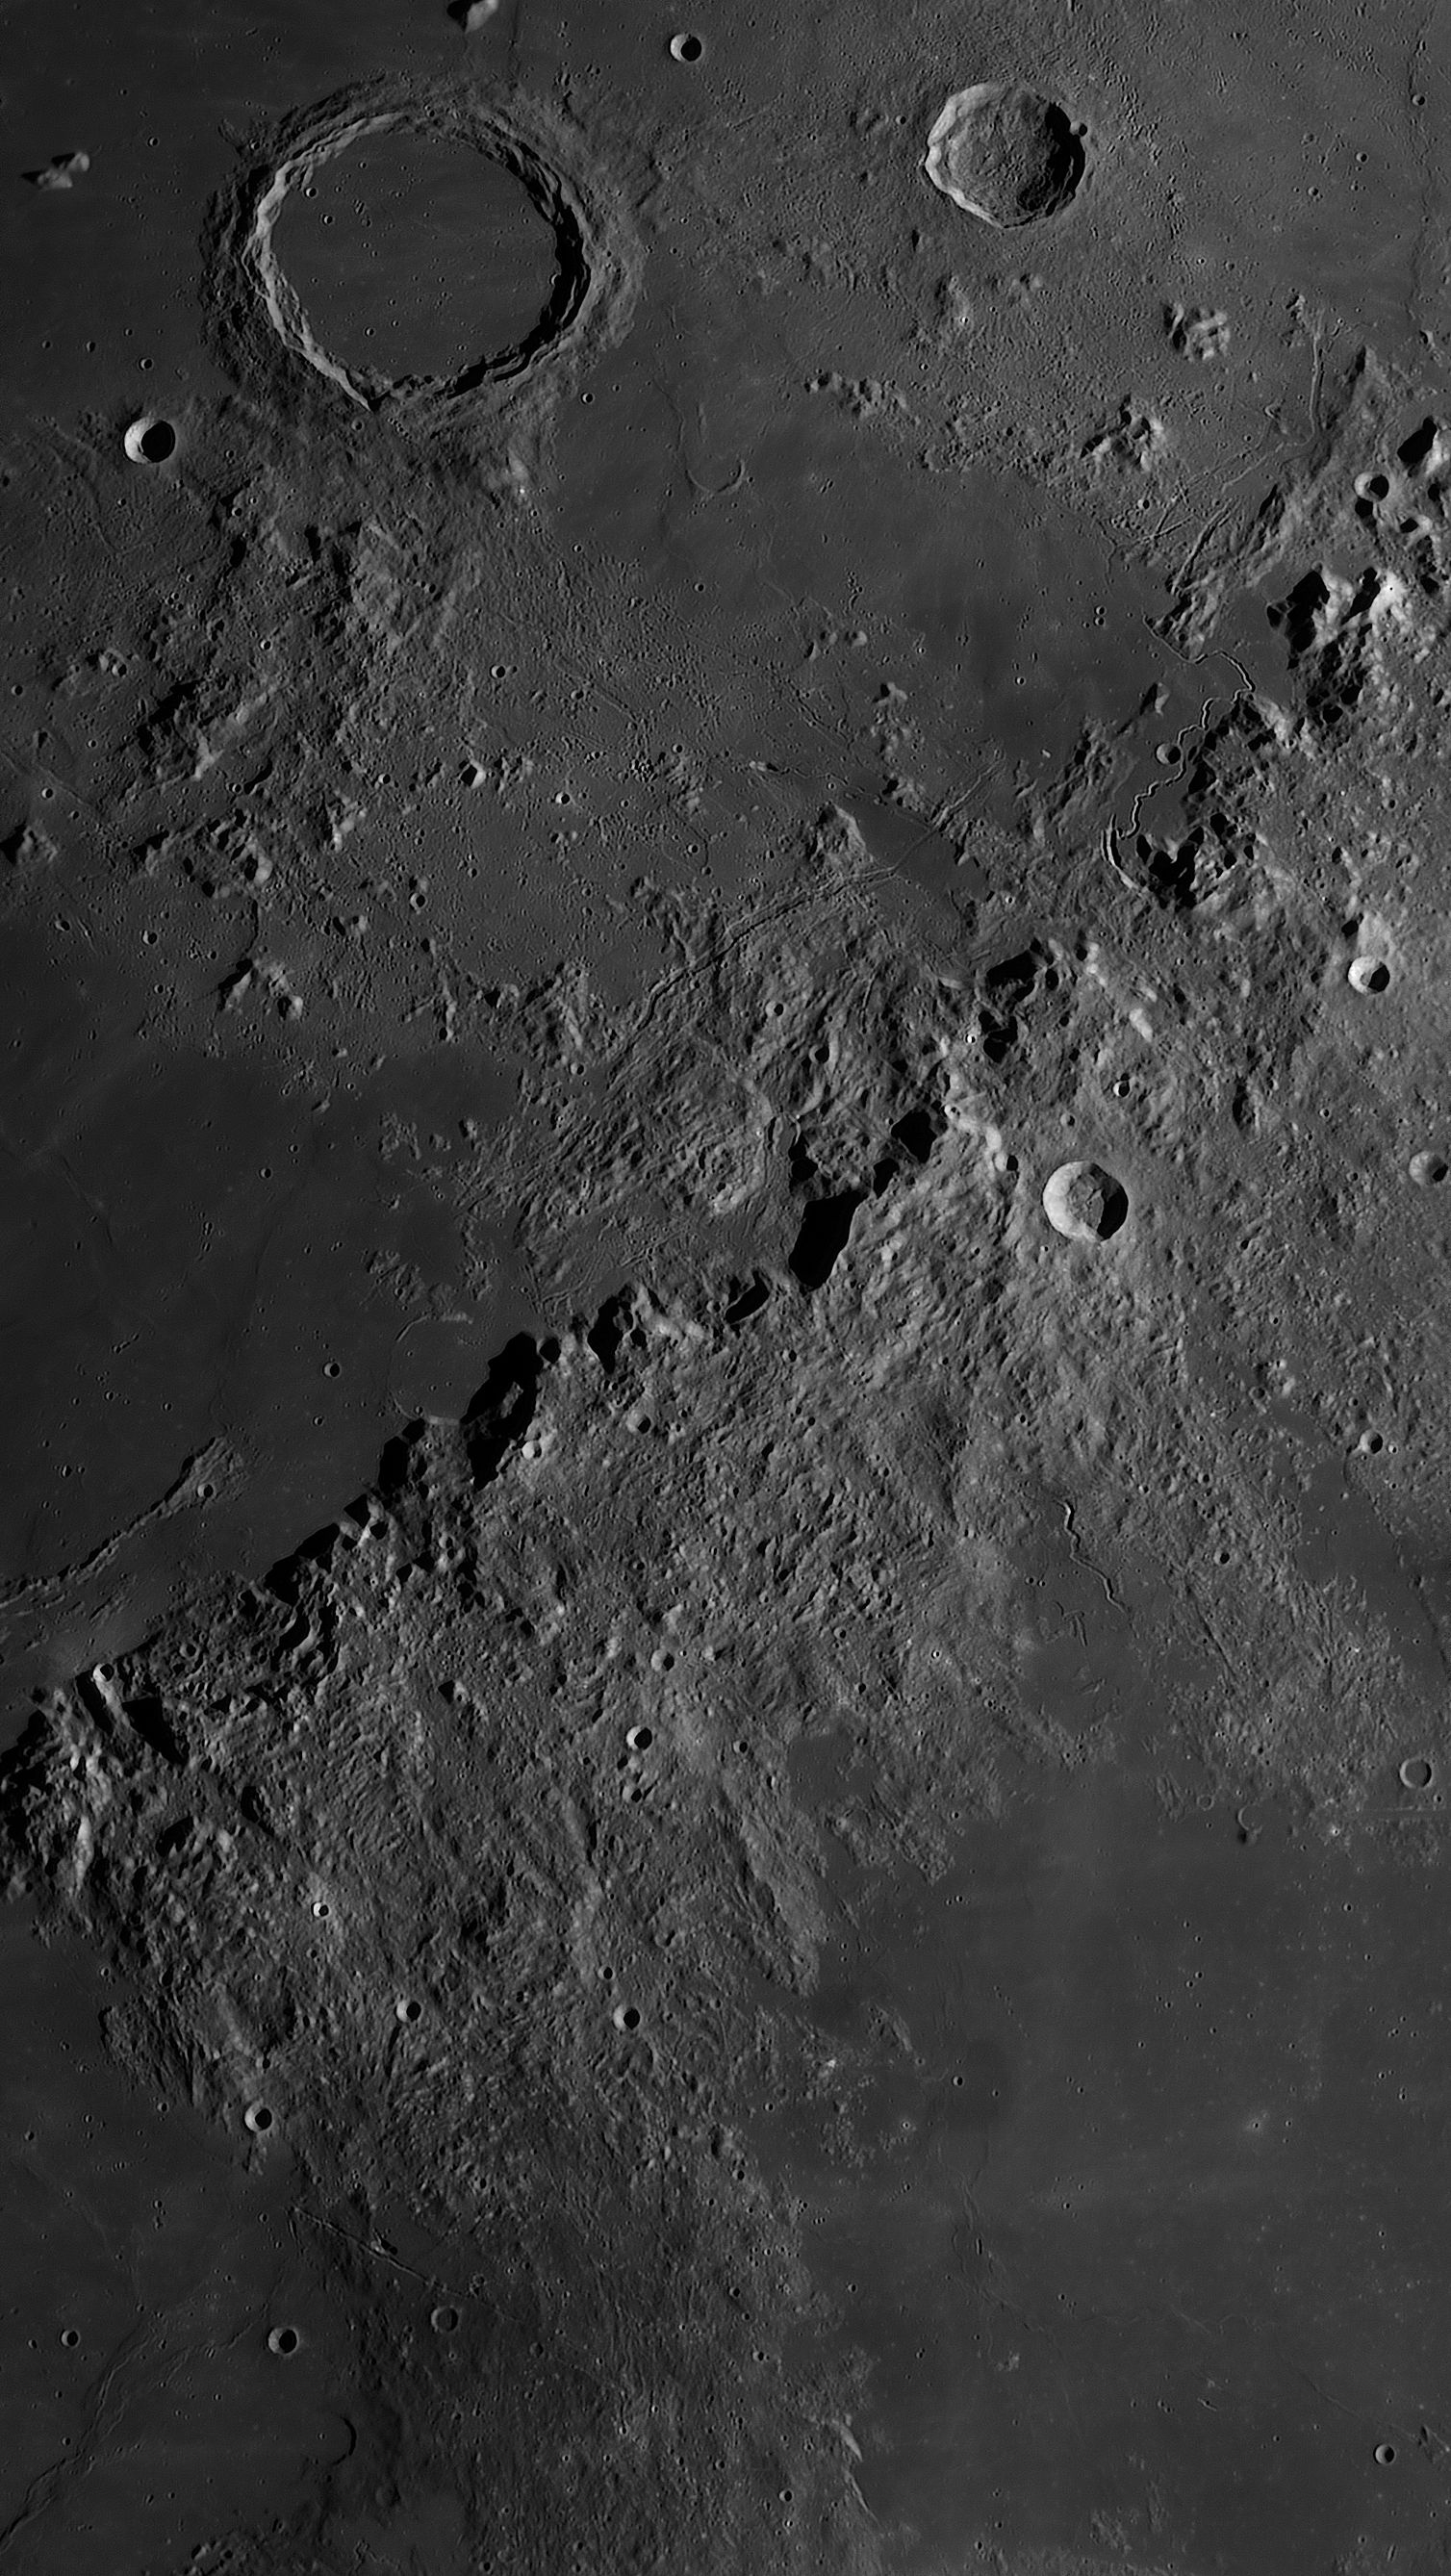 Montes Apenninus Astronomy Pictures Moon Texture Vintage